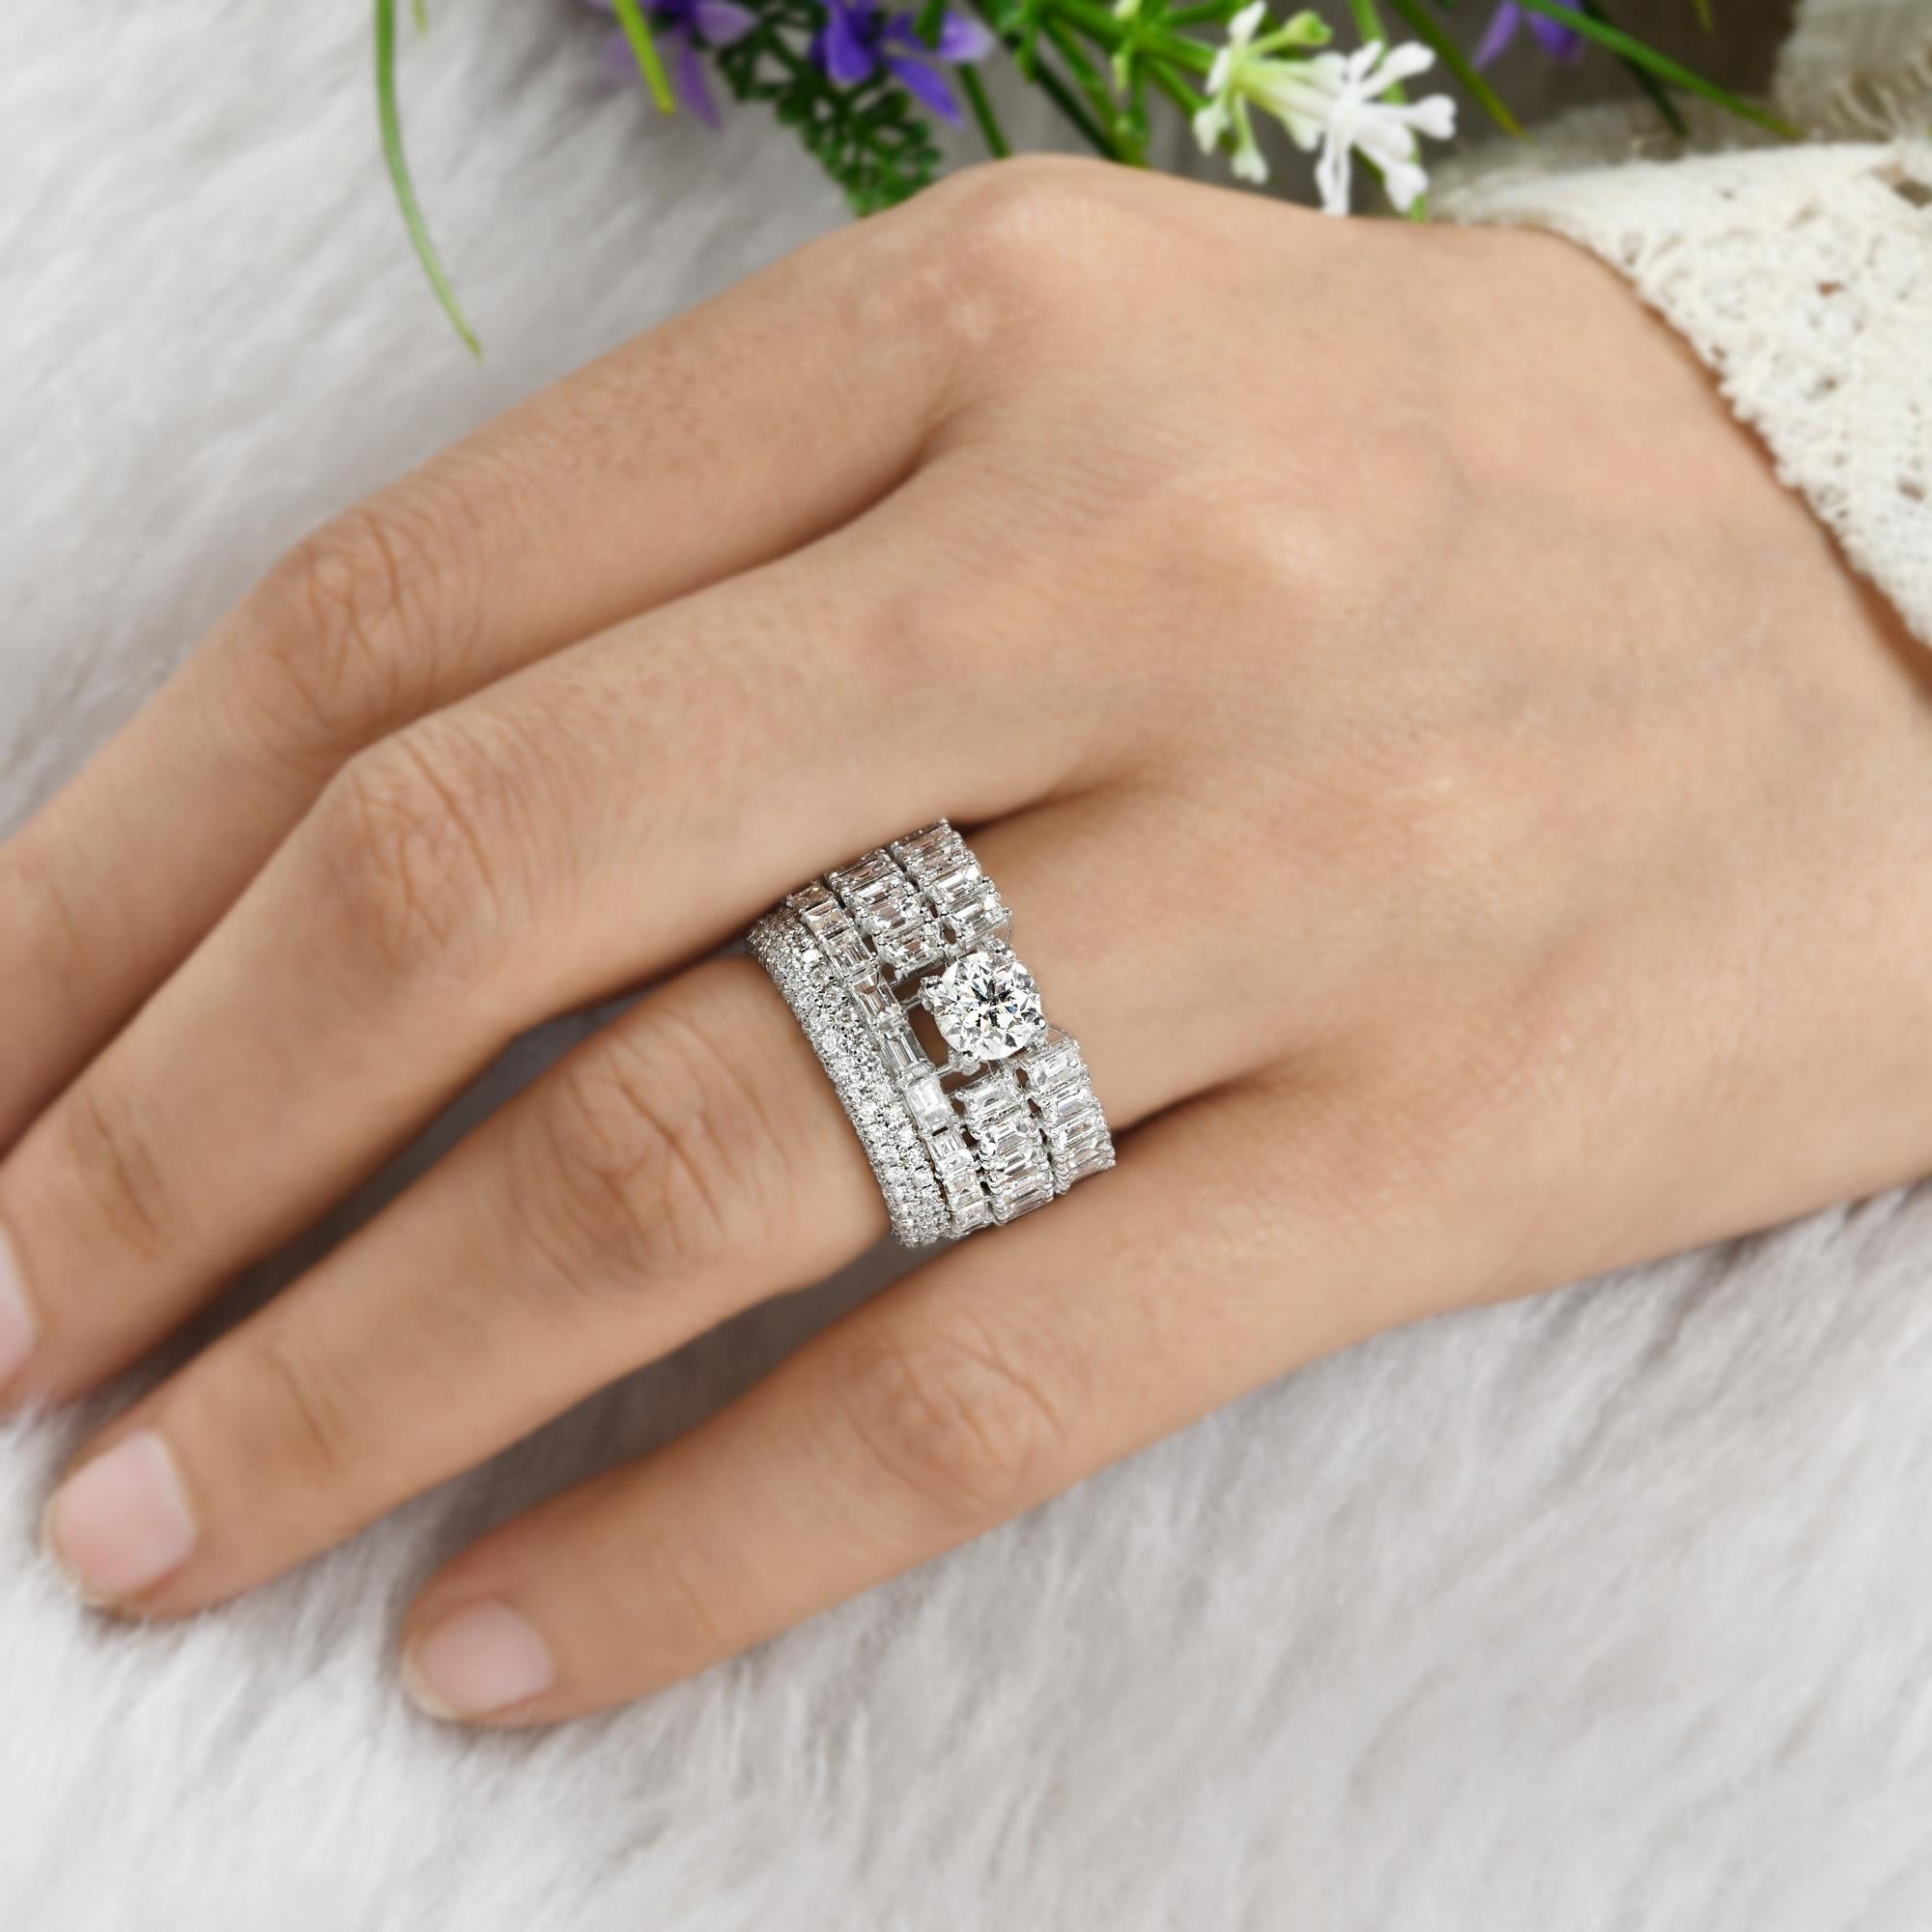 For Sale:  7.3 Carat SI Clarity HI Color Round Emerald Cut Diamond Ring 18 Karat White Gold 5